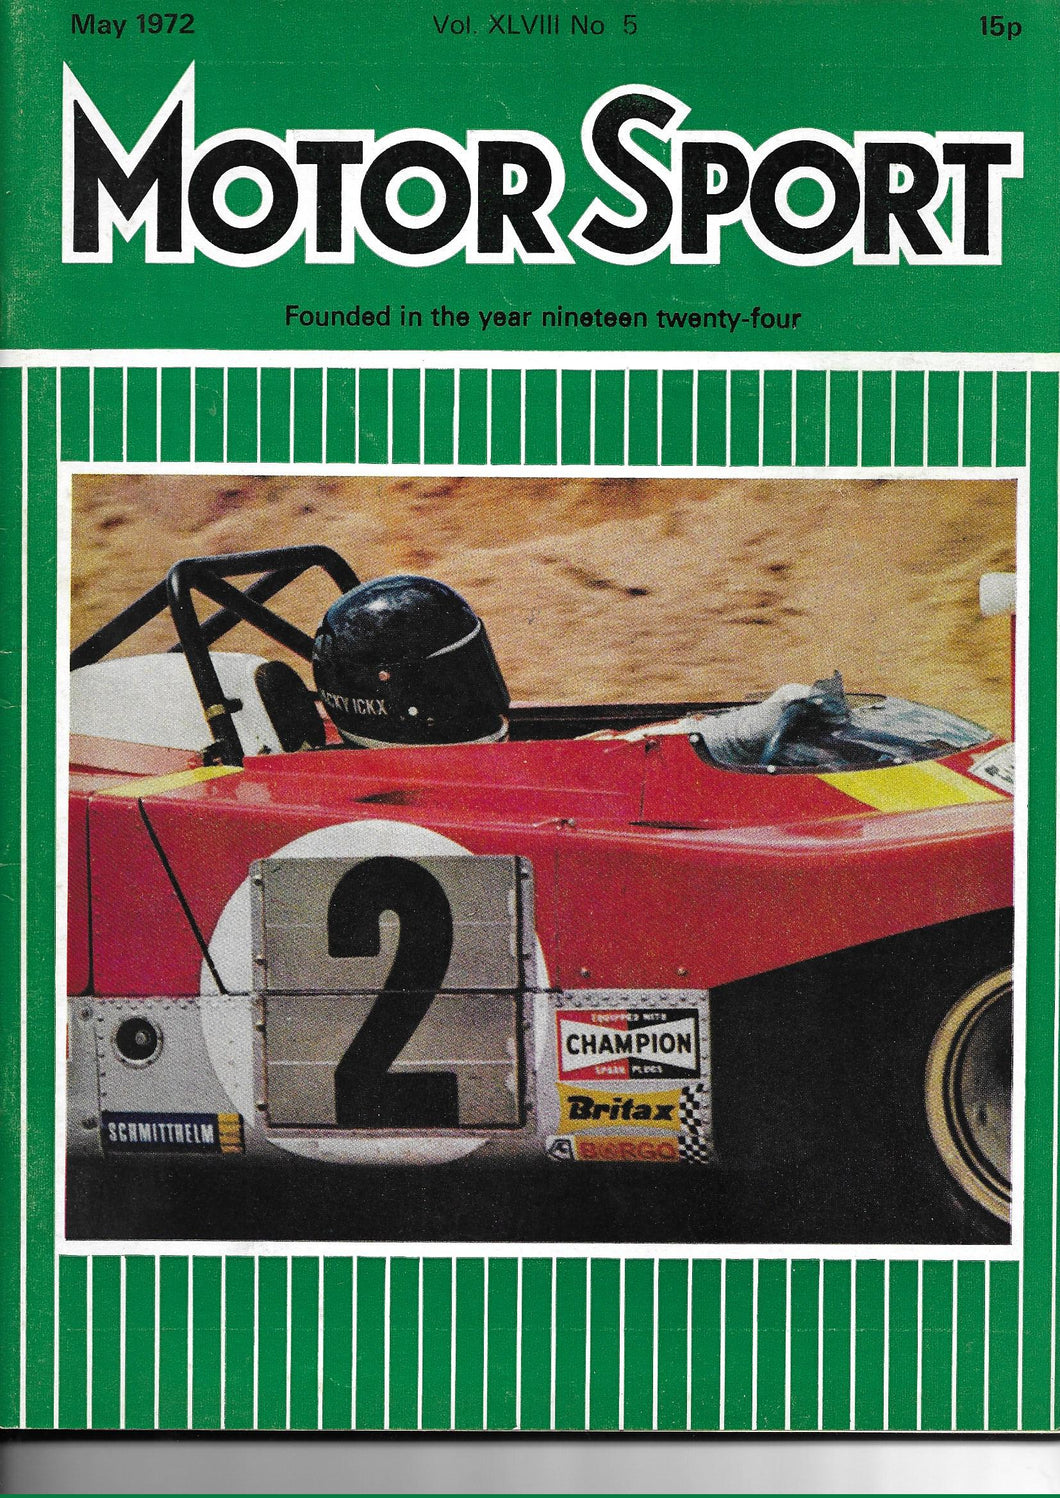 Motor Sport Magazine May 1972 Vol XLVIII No 5